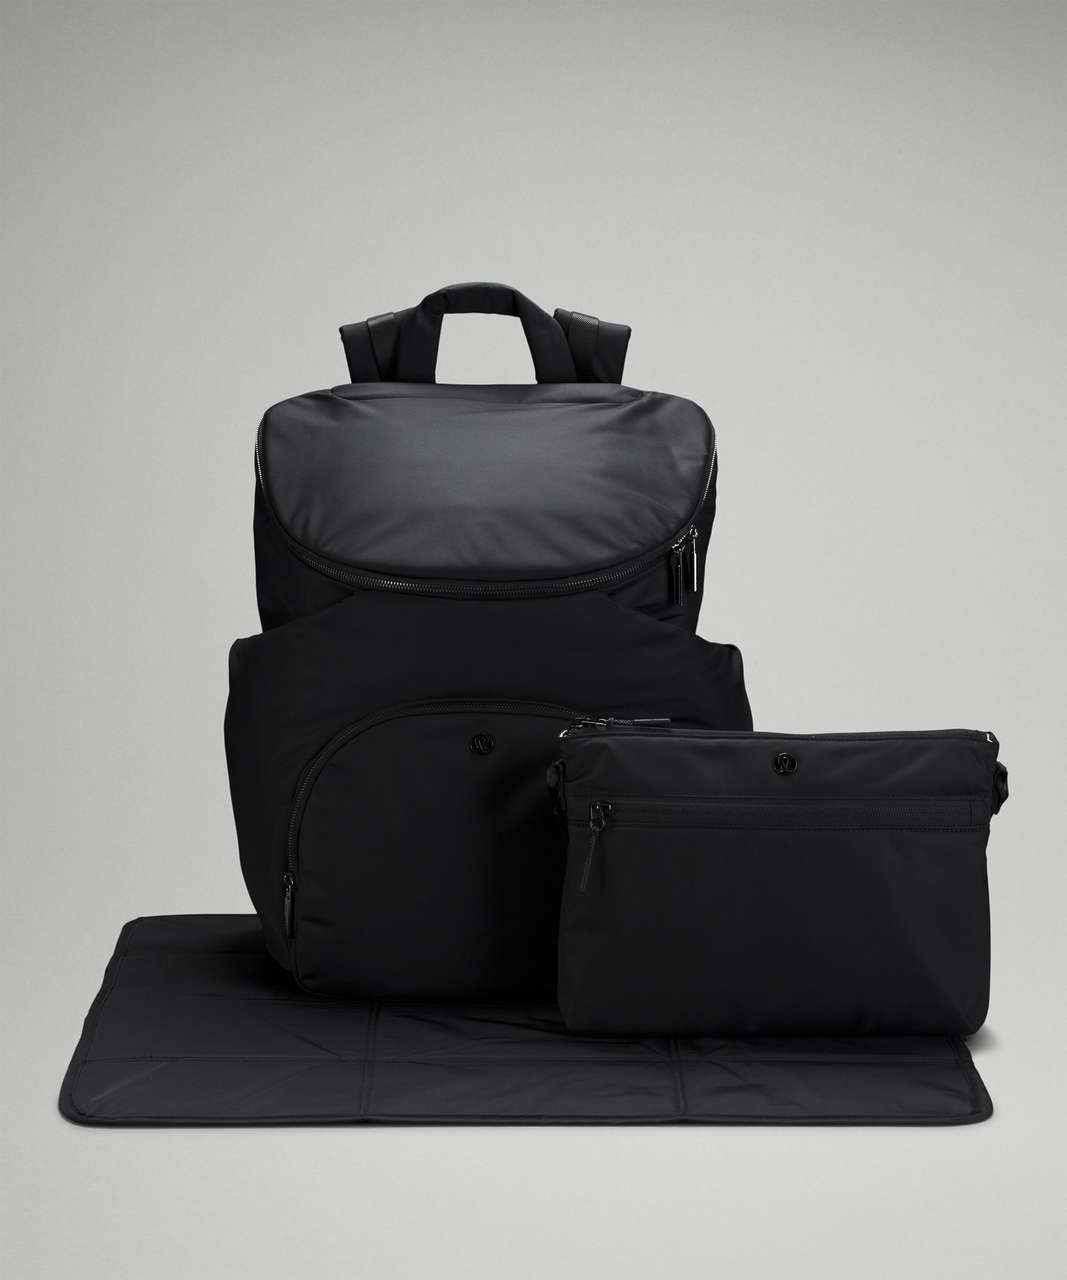 Lululemon New Parent Backpack 17L - Black / Trench